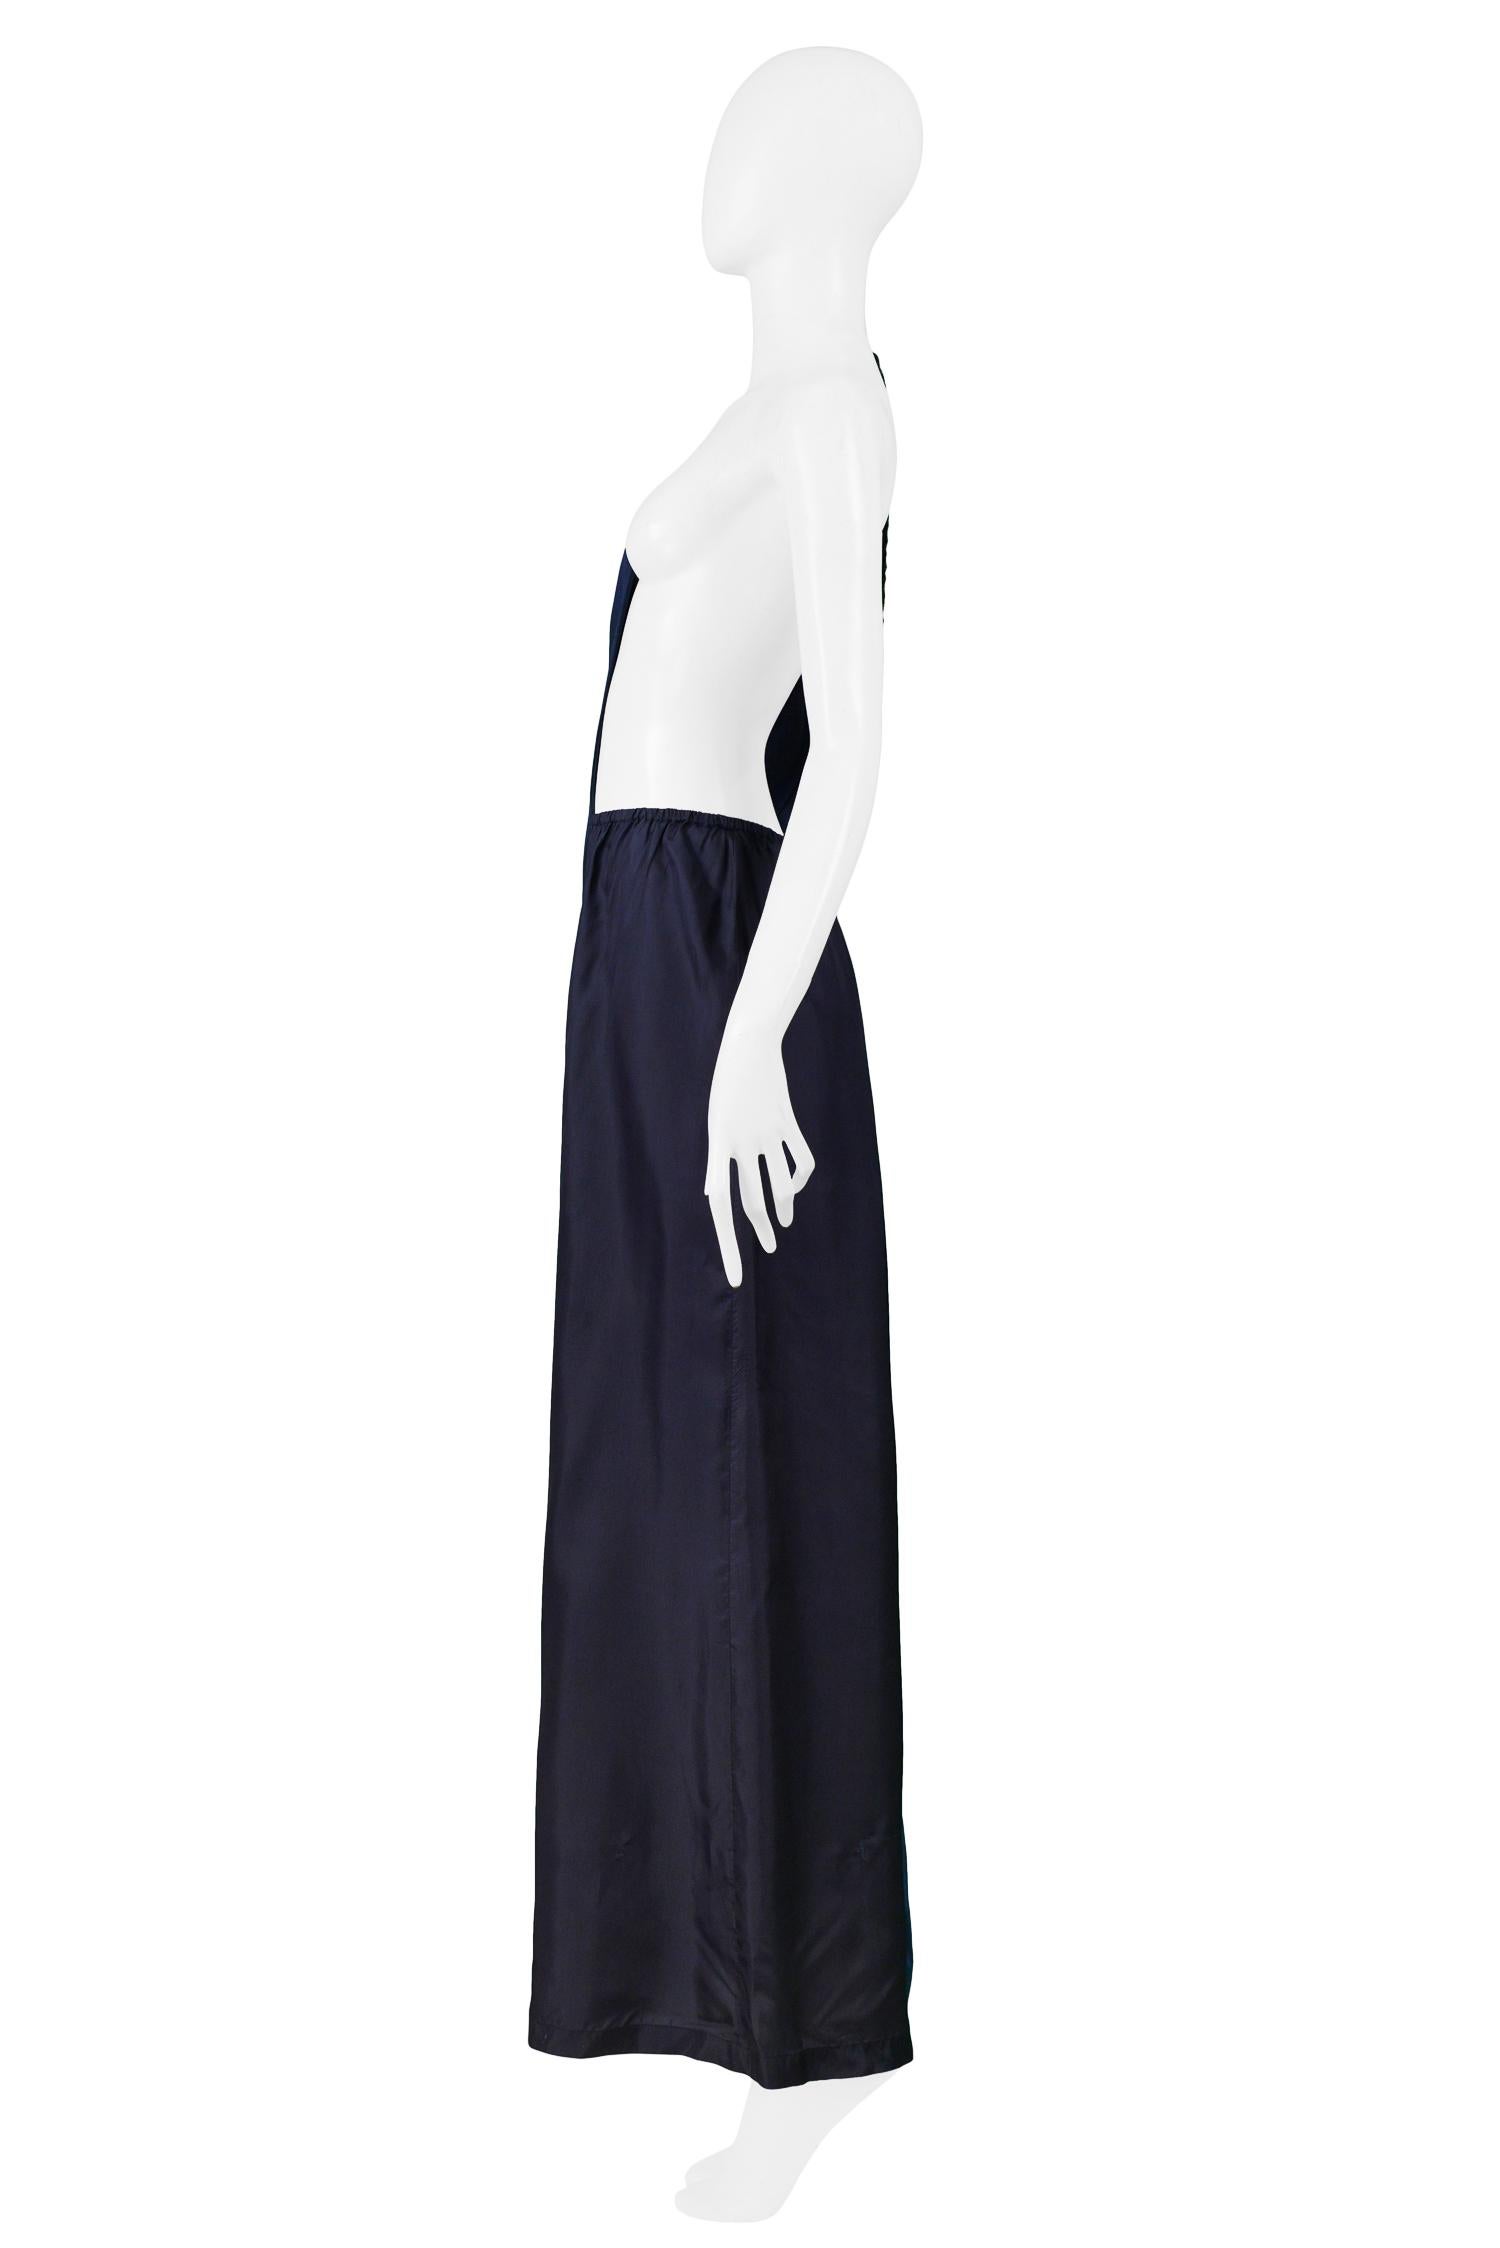 Maison Martin Margiela Blue Asymmetrical Avant Garde Maxi Apron Dress In Excellent Condition In Los Angeles, CA